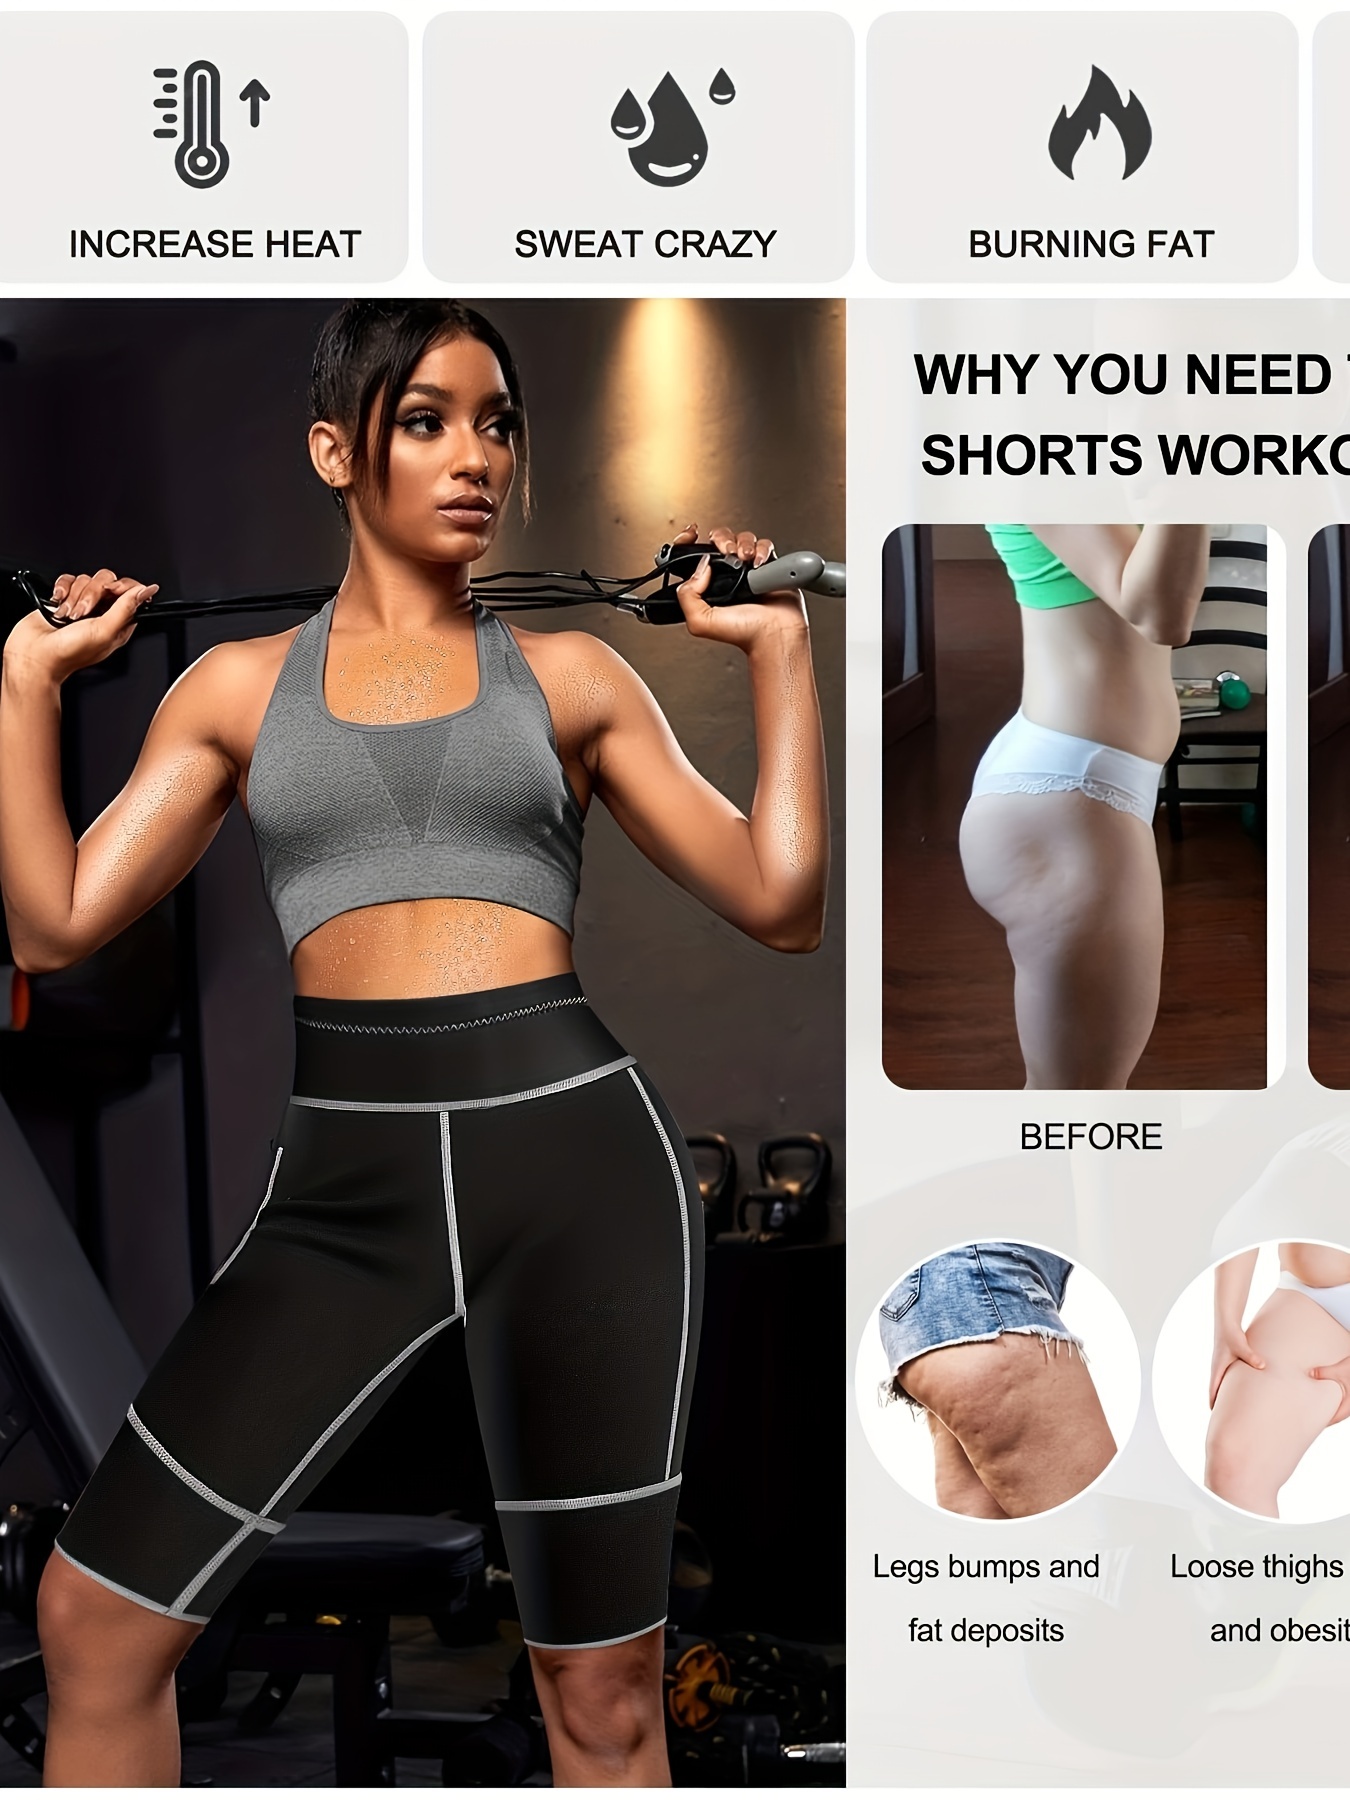 Sweat Sauna Pants Body Shaper Weight Loss Slimming Pants Women Waist T